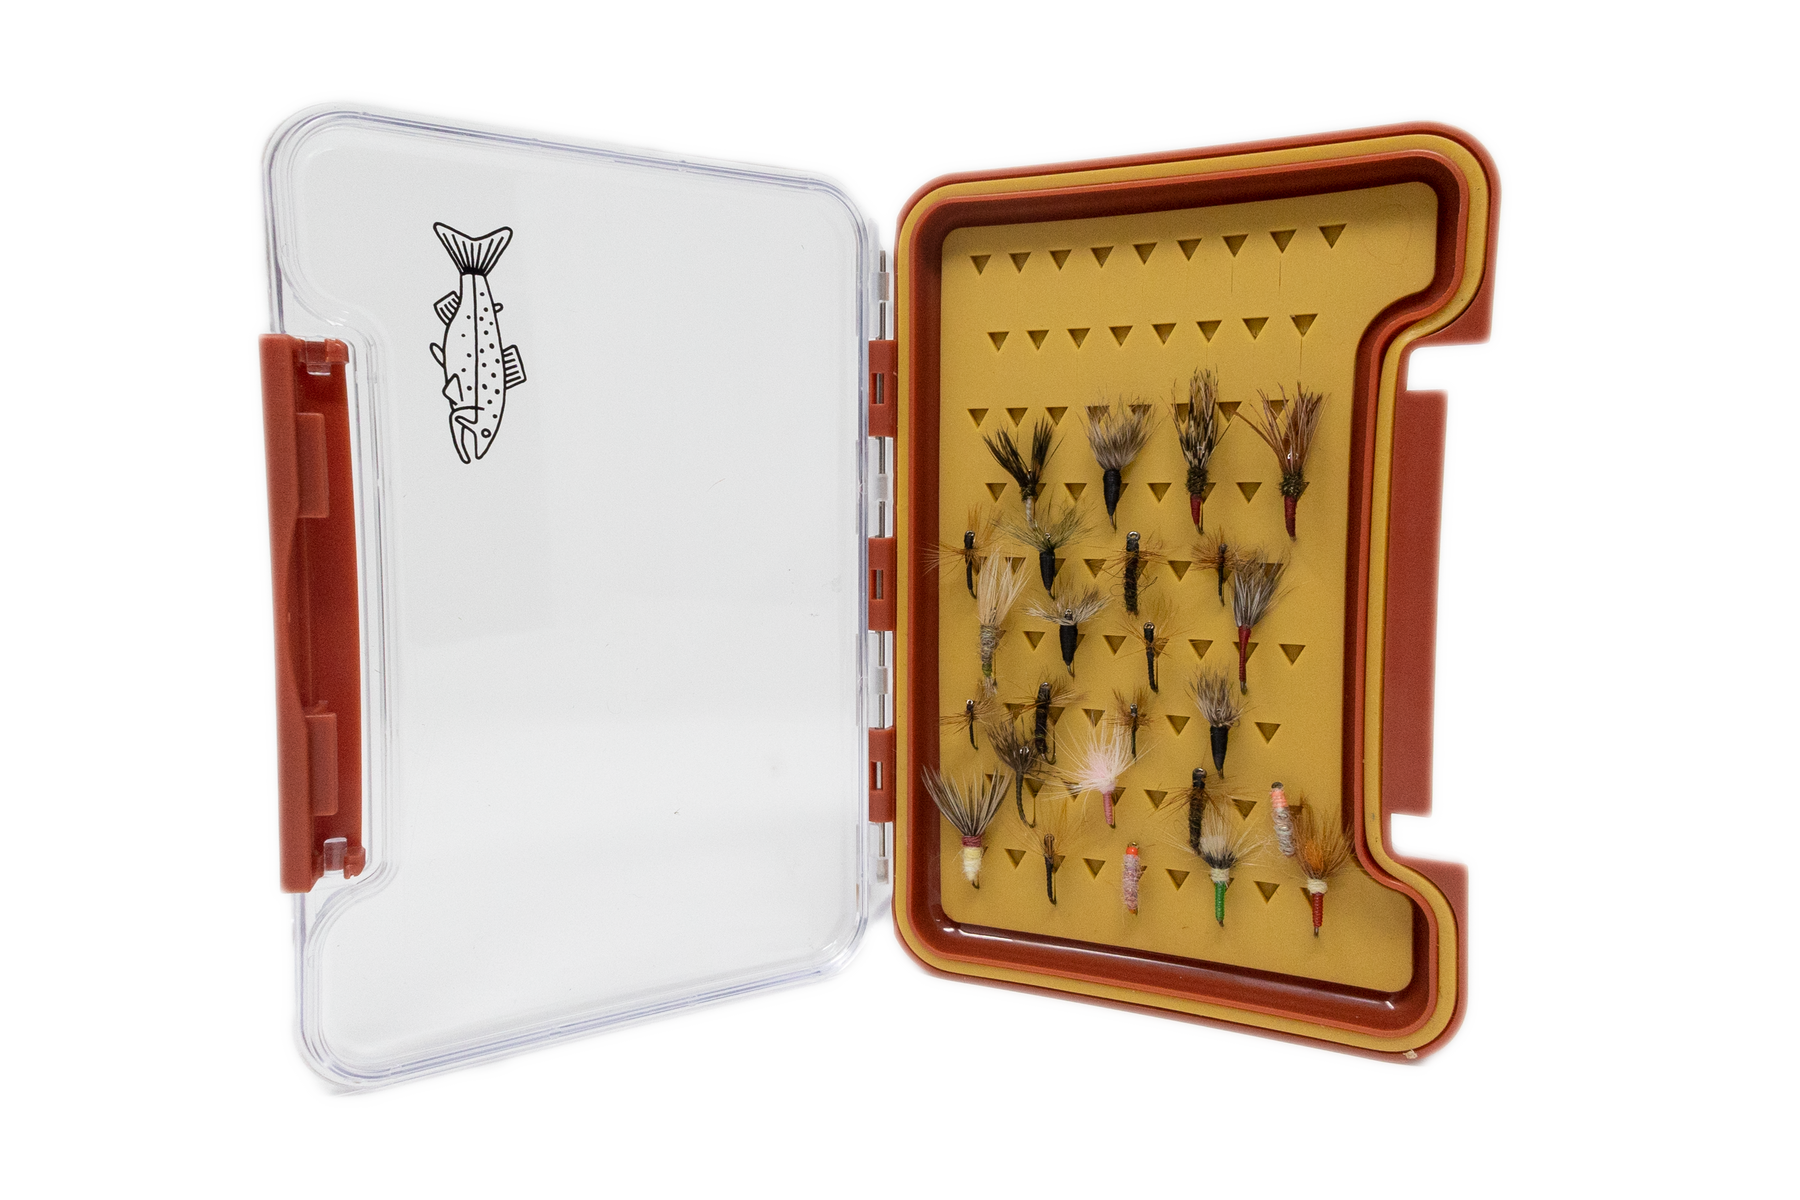 Loaded Fly Box with 24 Kebari Flies